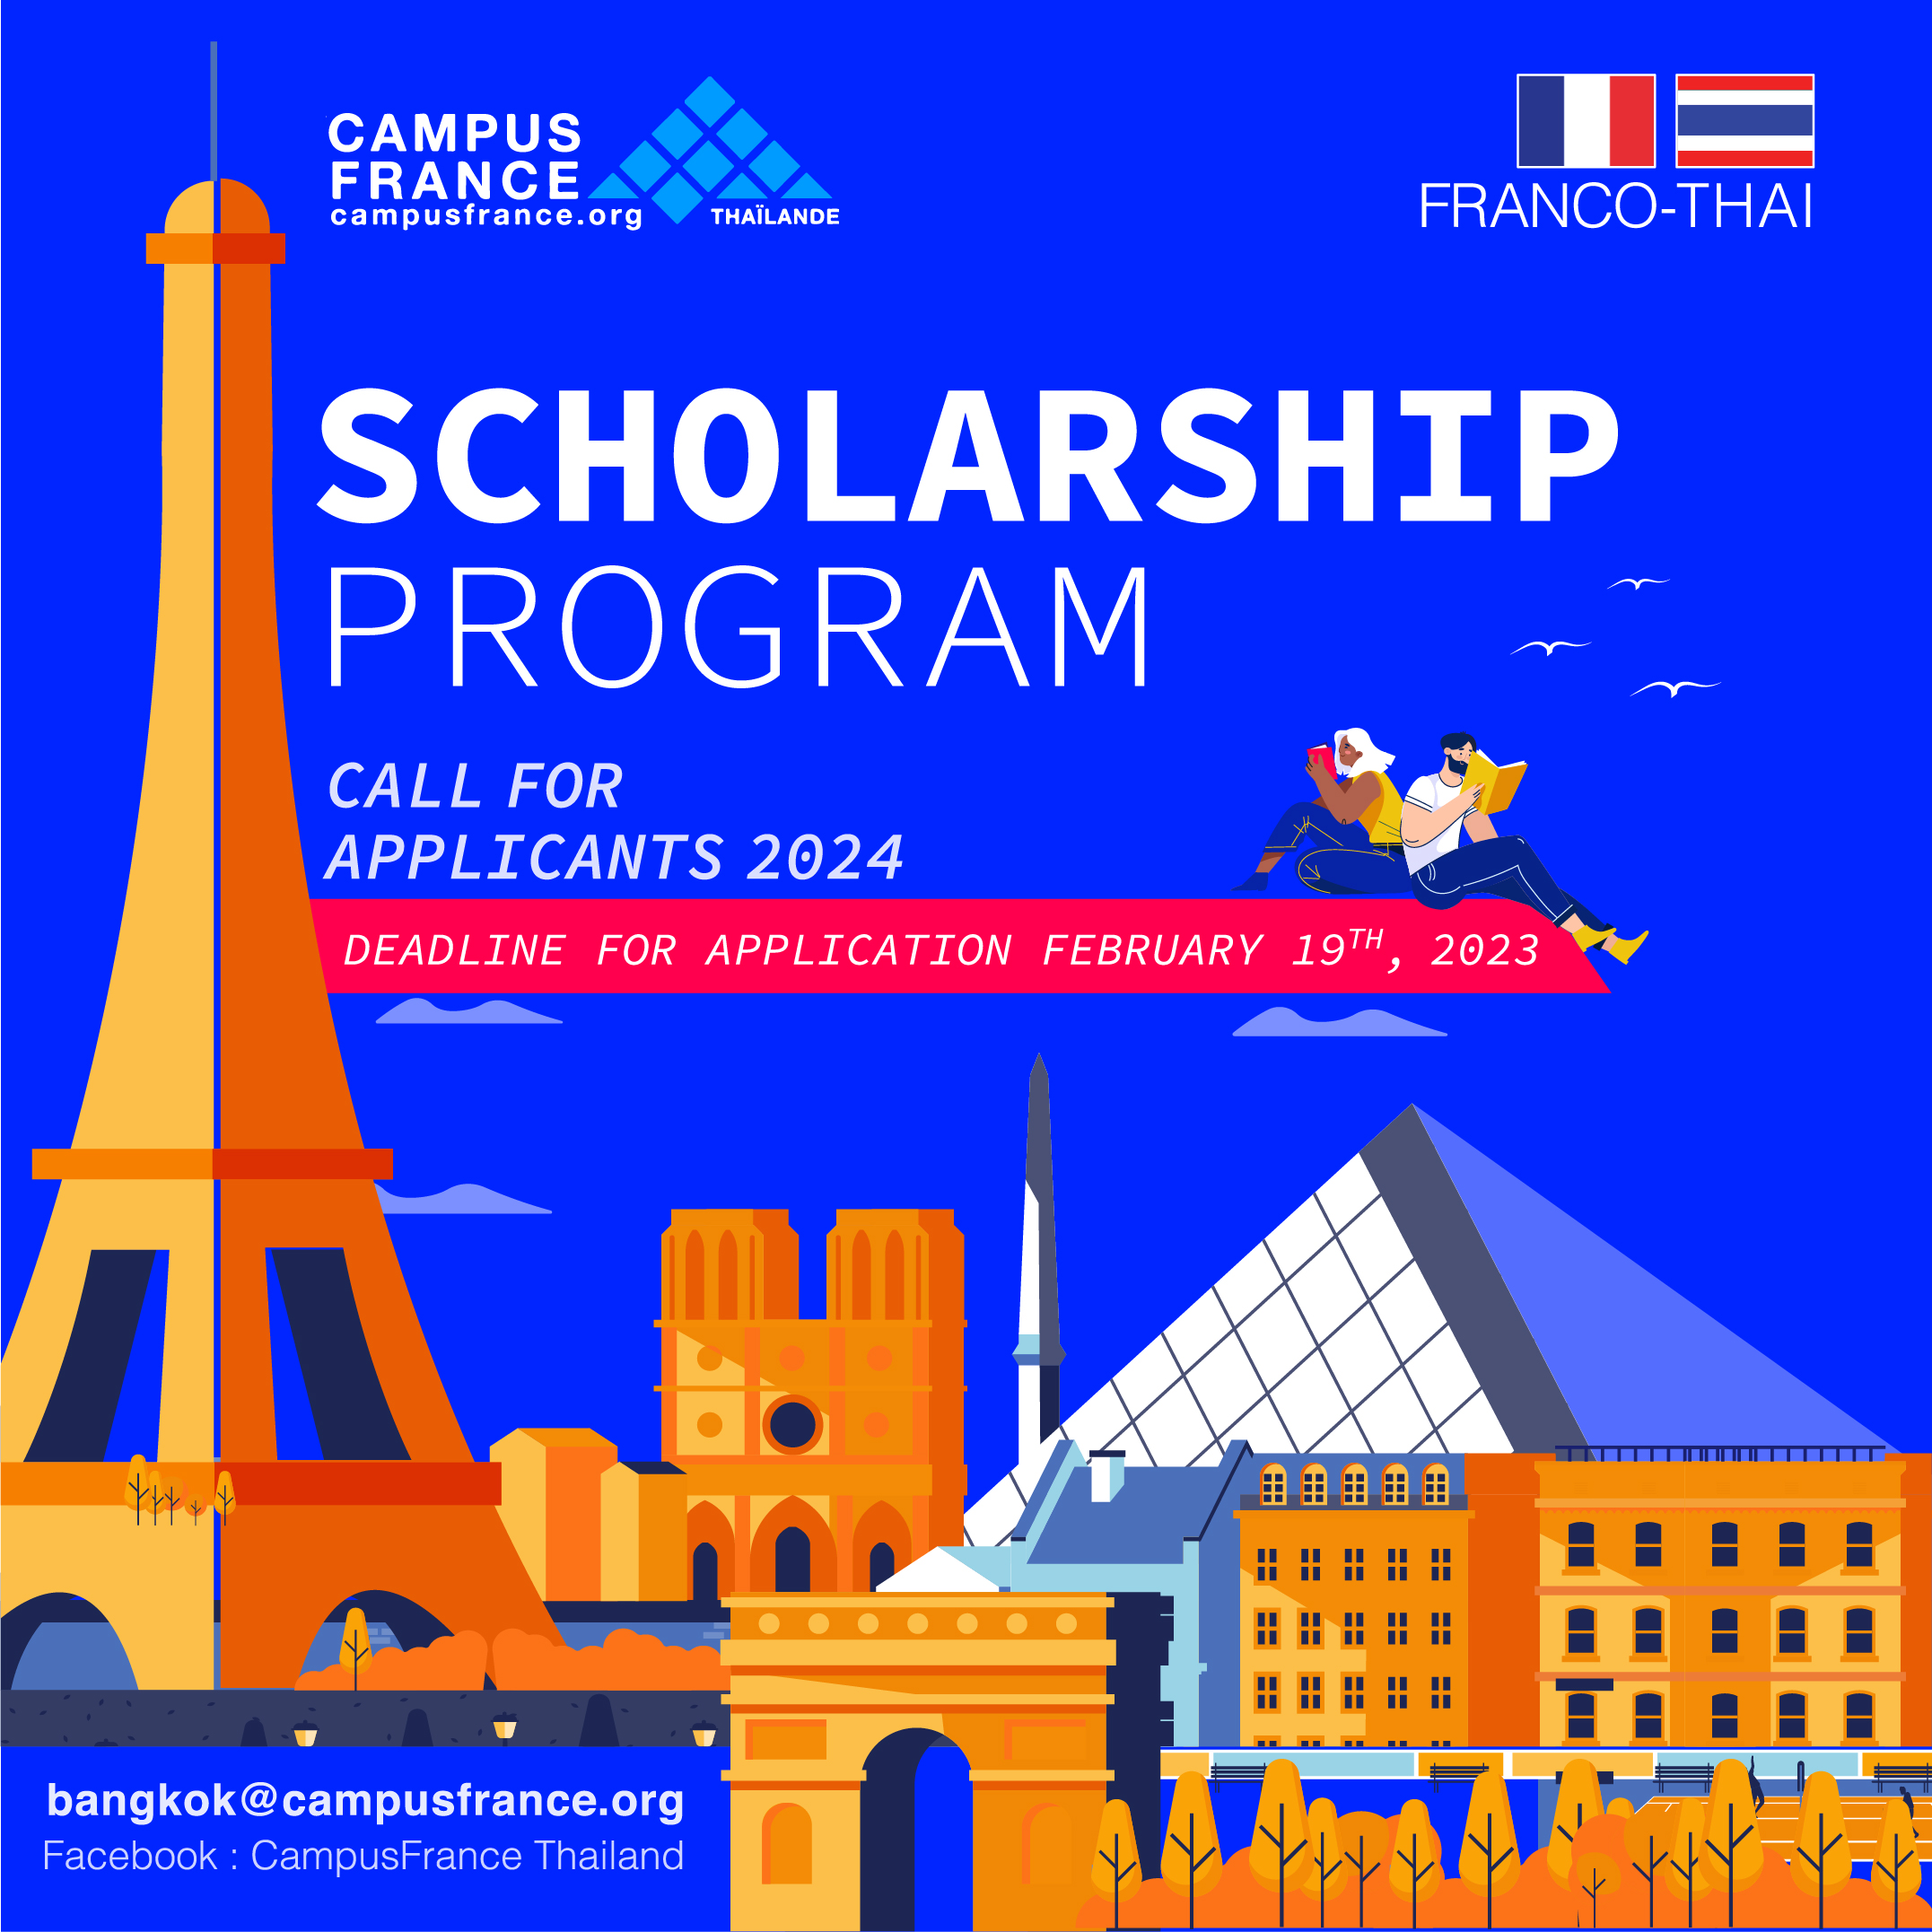 Franco-Thai Scholarship Program